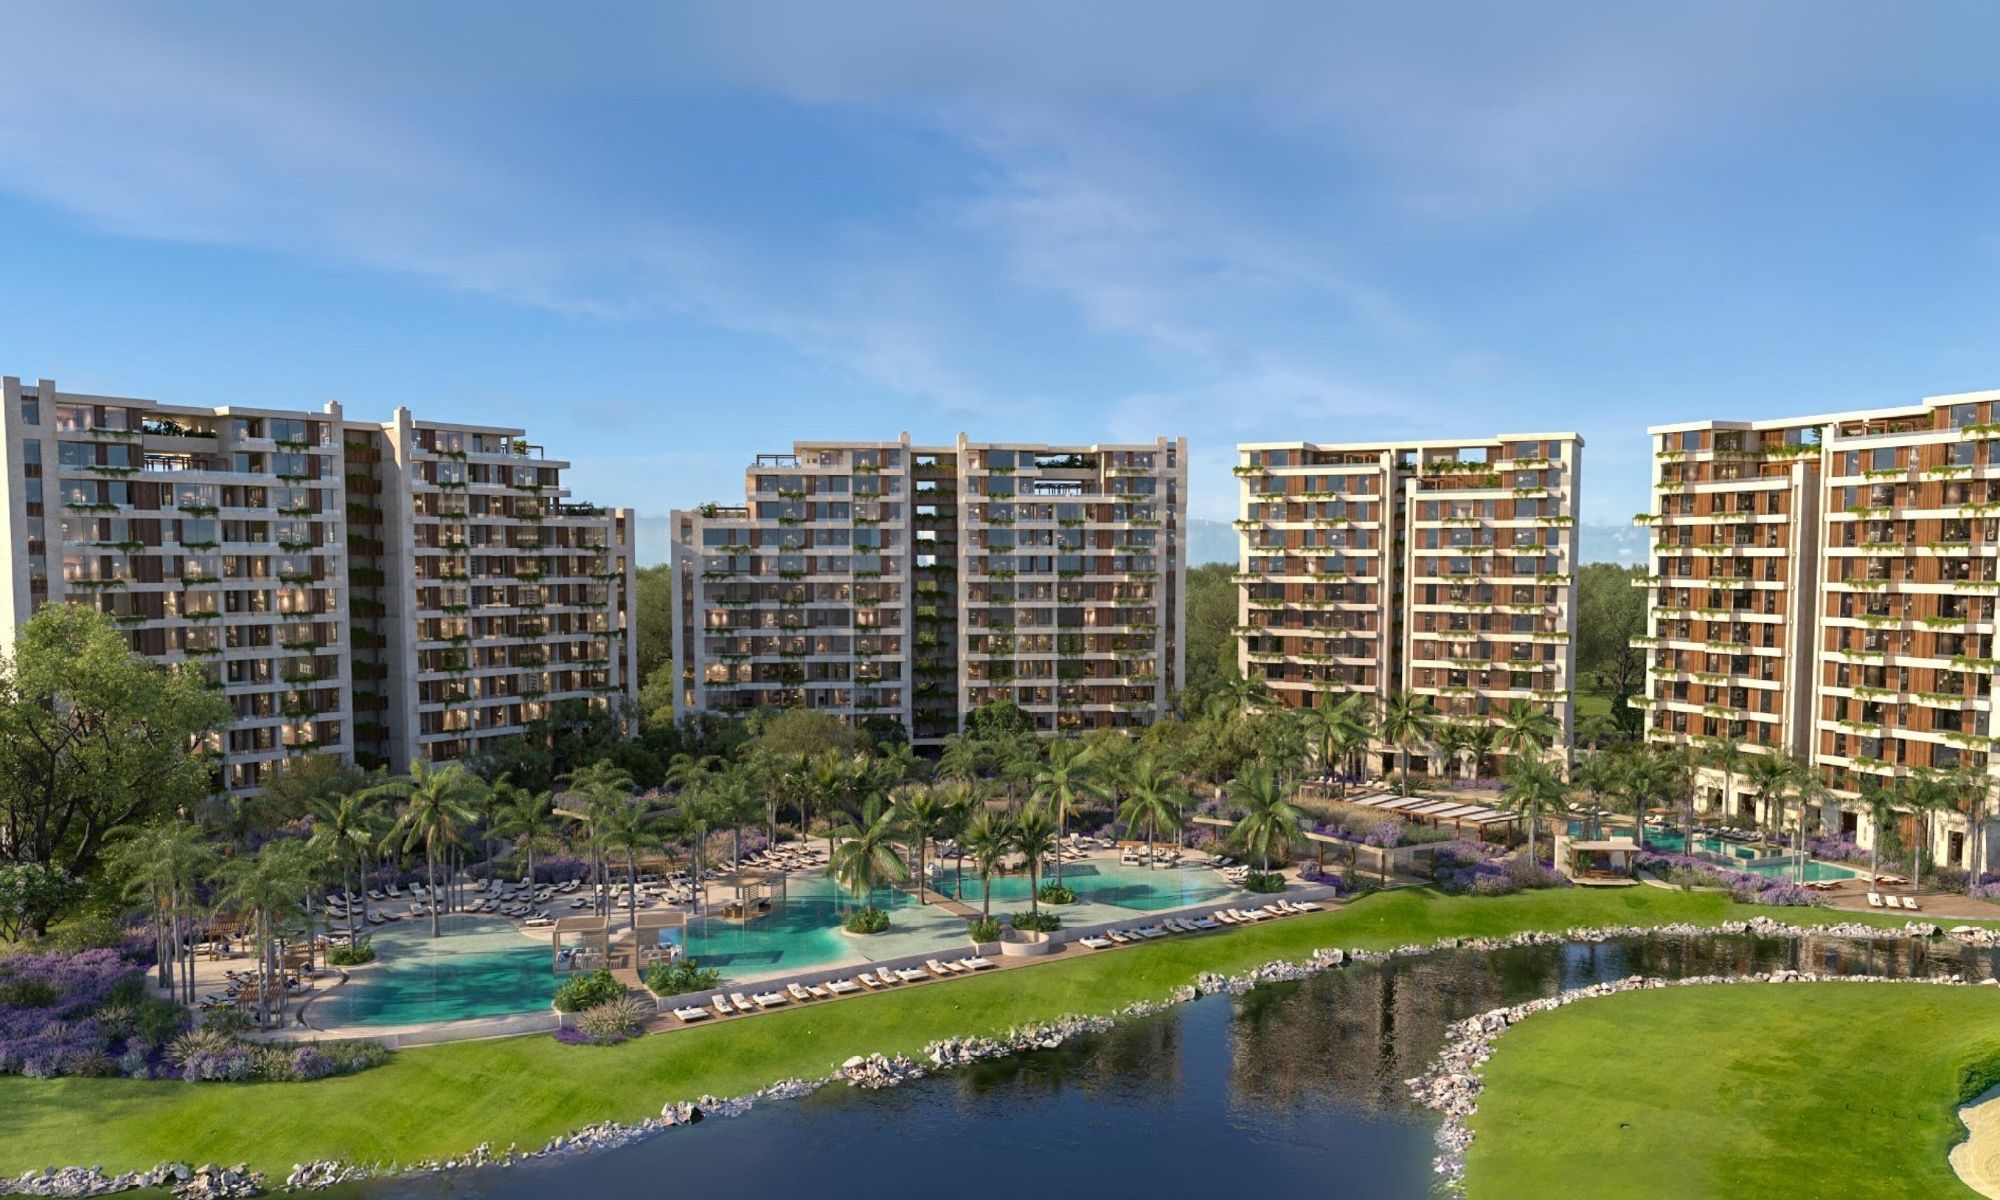 Condominium 350 meters from the beach, ocean view pool, art gallery, unique design, roof garden with jacuzzi, for sale in Playa del Carmen.